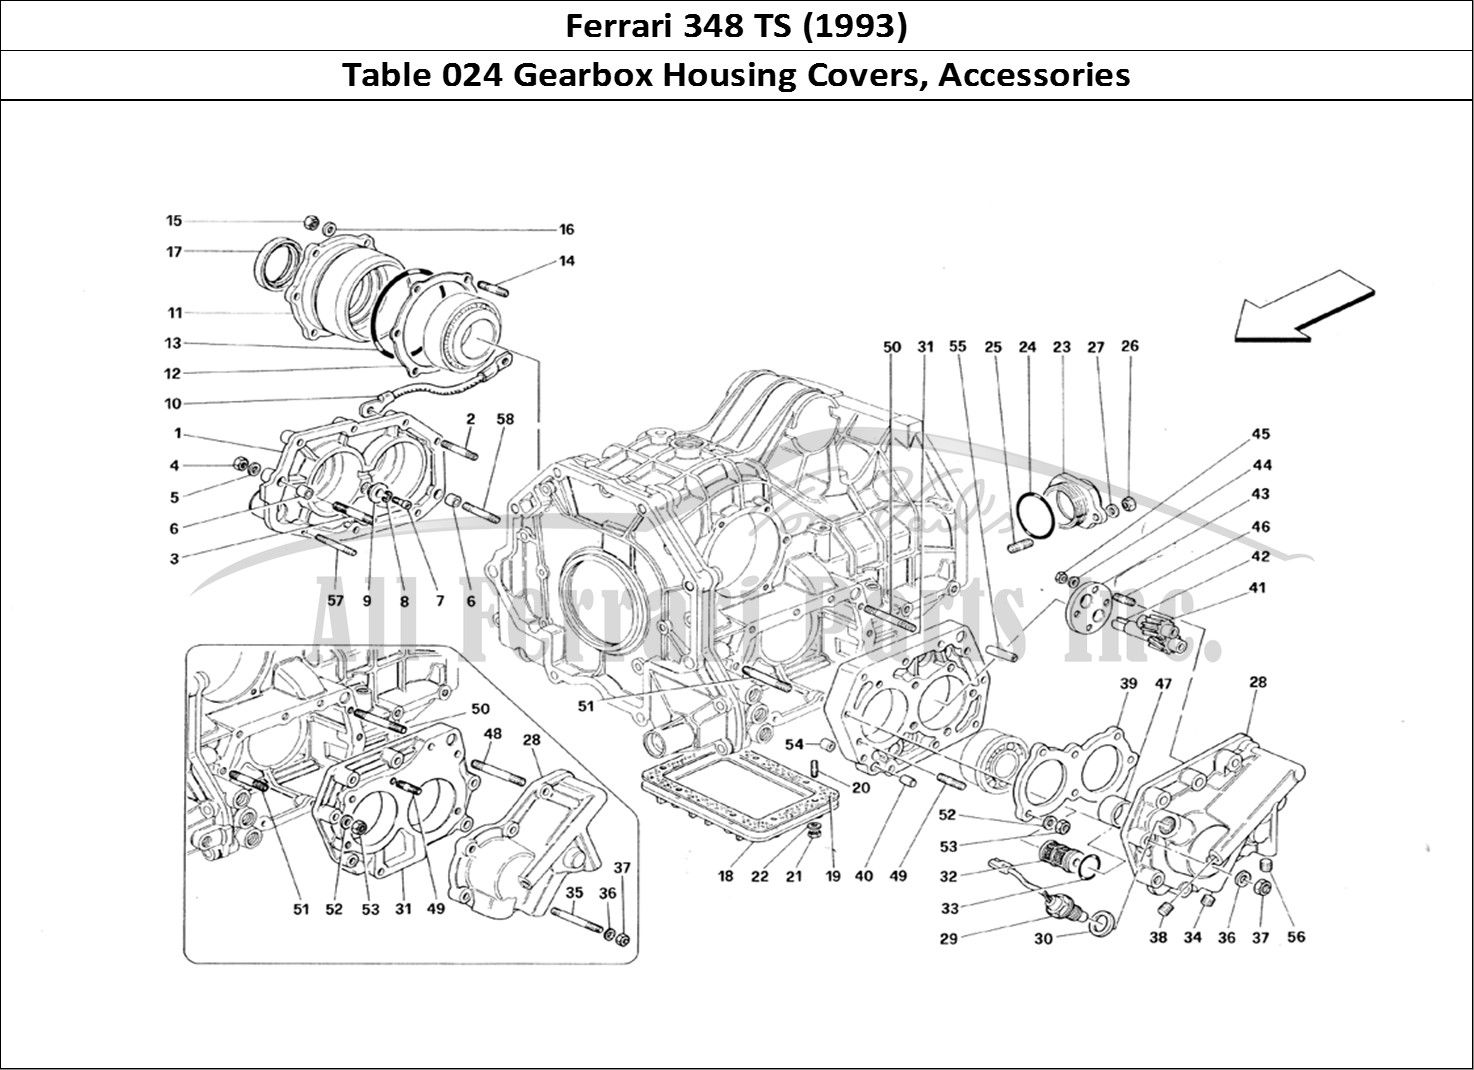 Ferrari Parts Ferrari 348 TB (1993) Page 024 Gearbox Covers